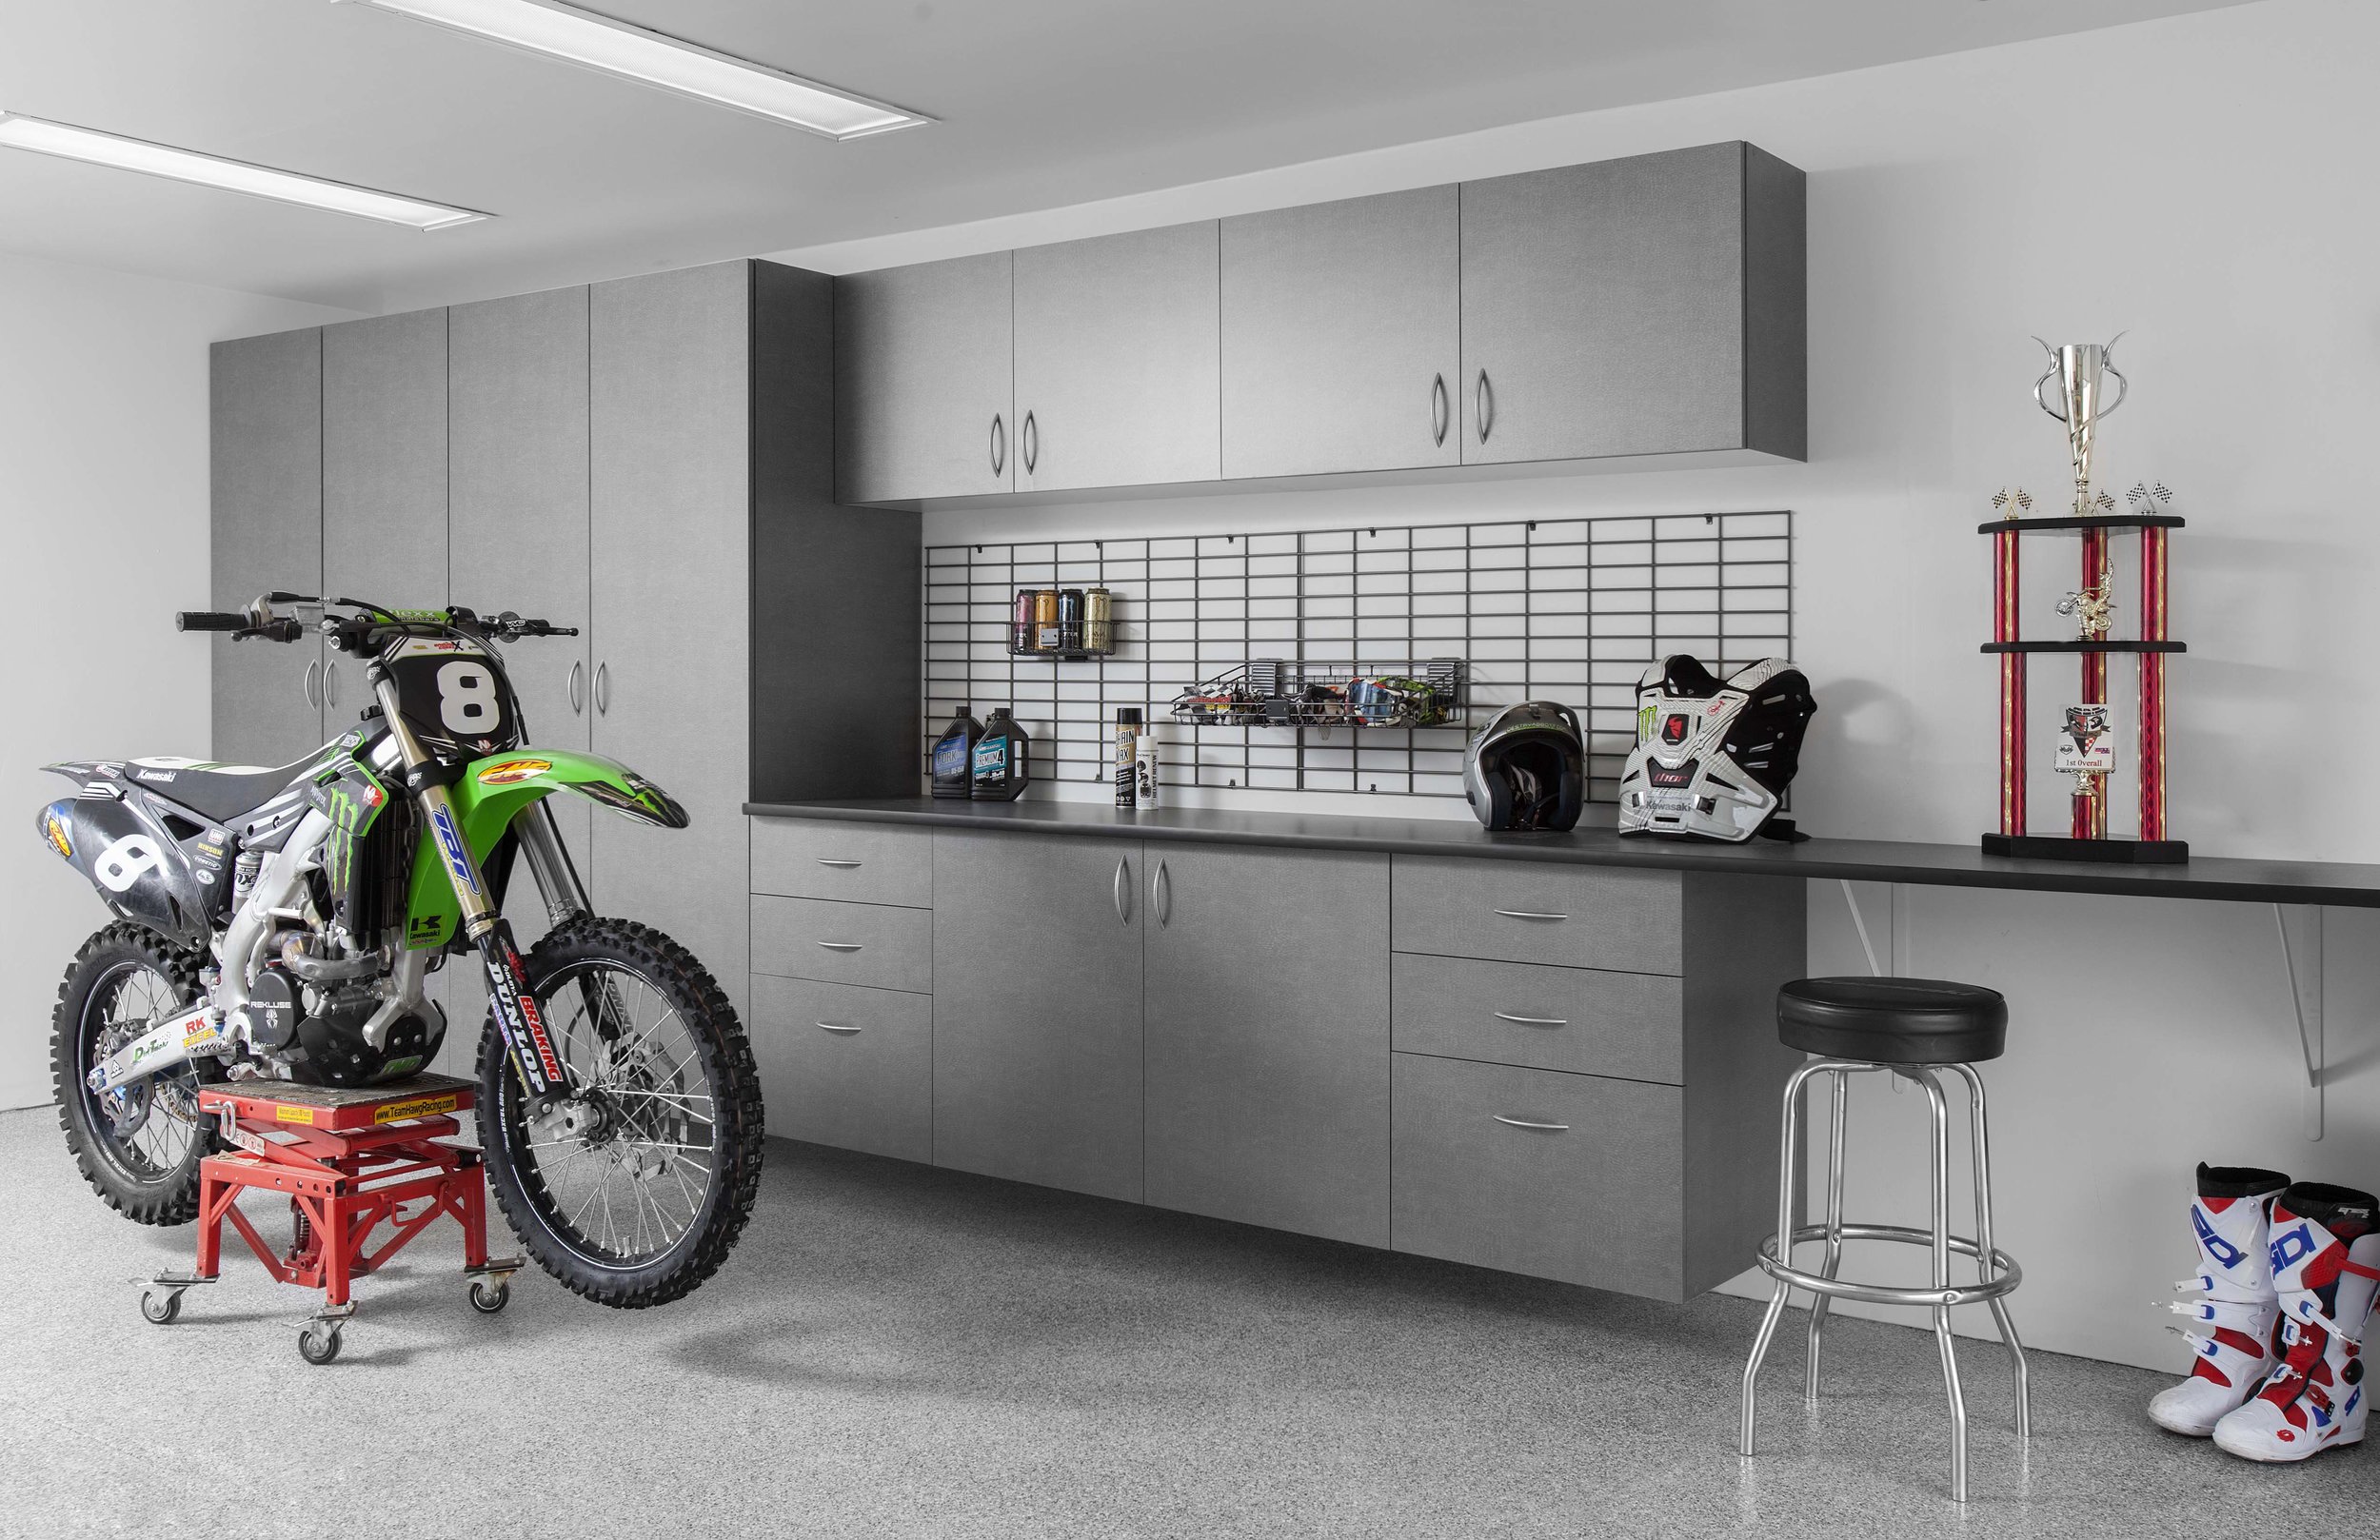 Pewter Cabinets-Ebony Star Workbench-Silverado Floor-Dirt Bike-Abbott-May 2013.jpg